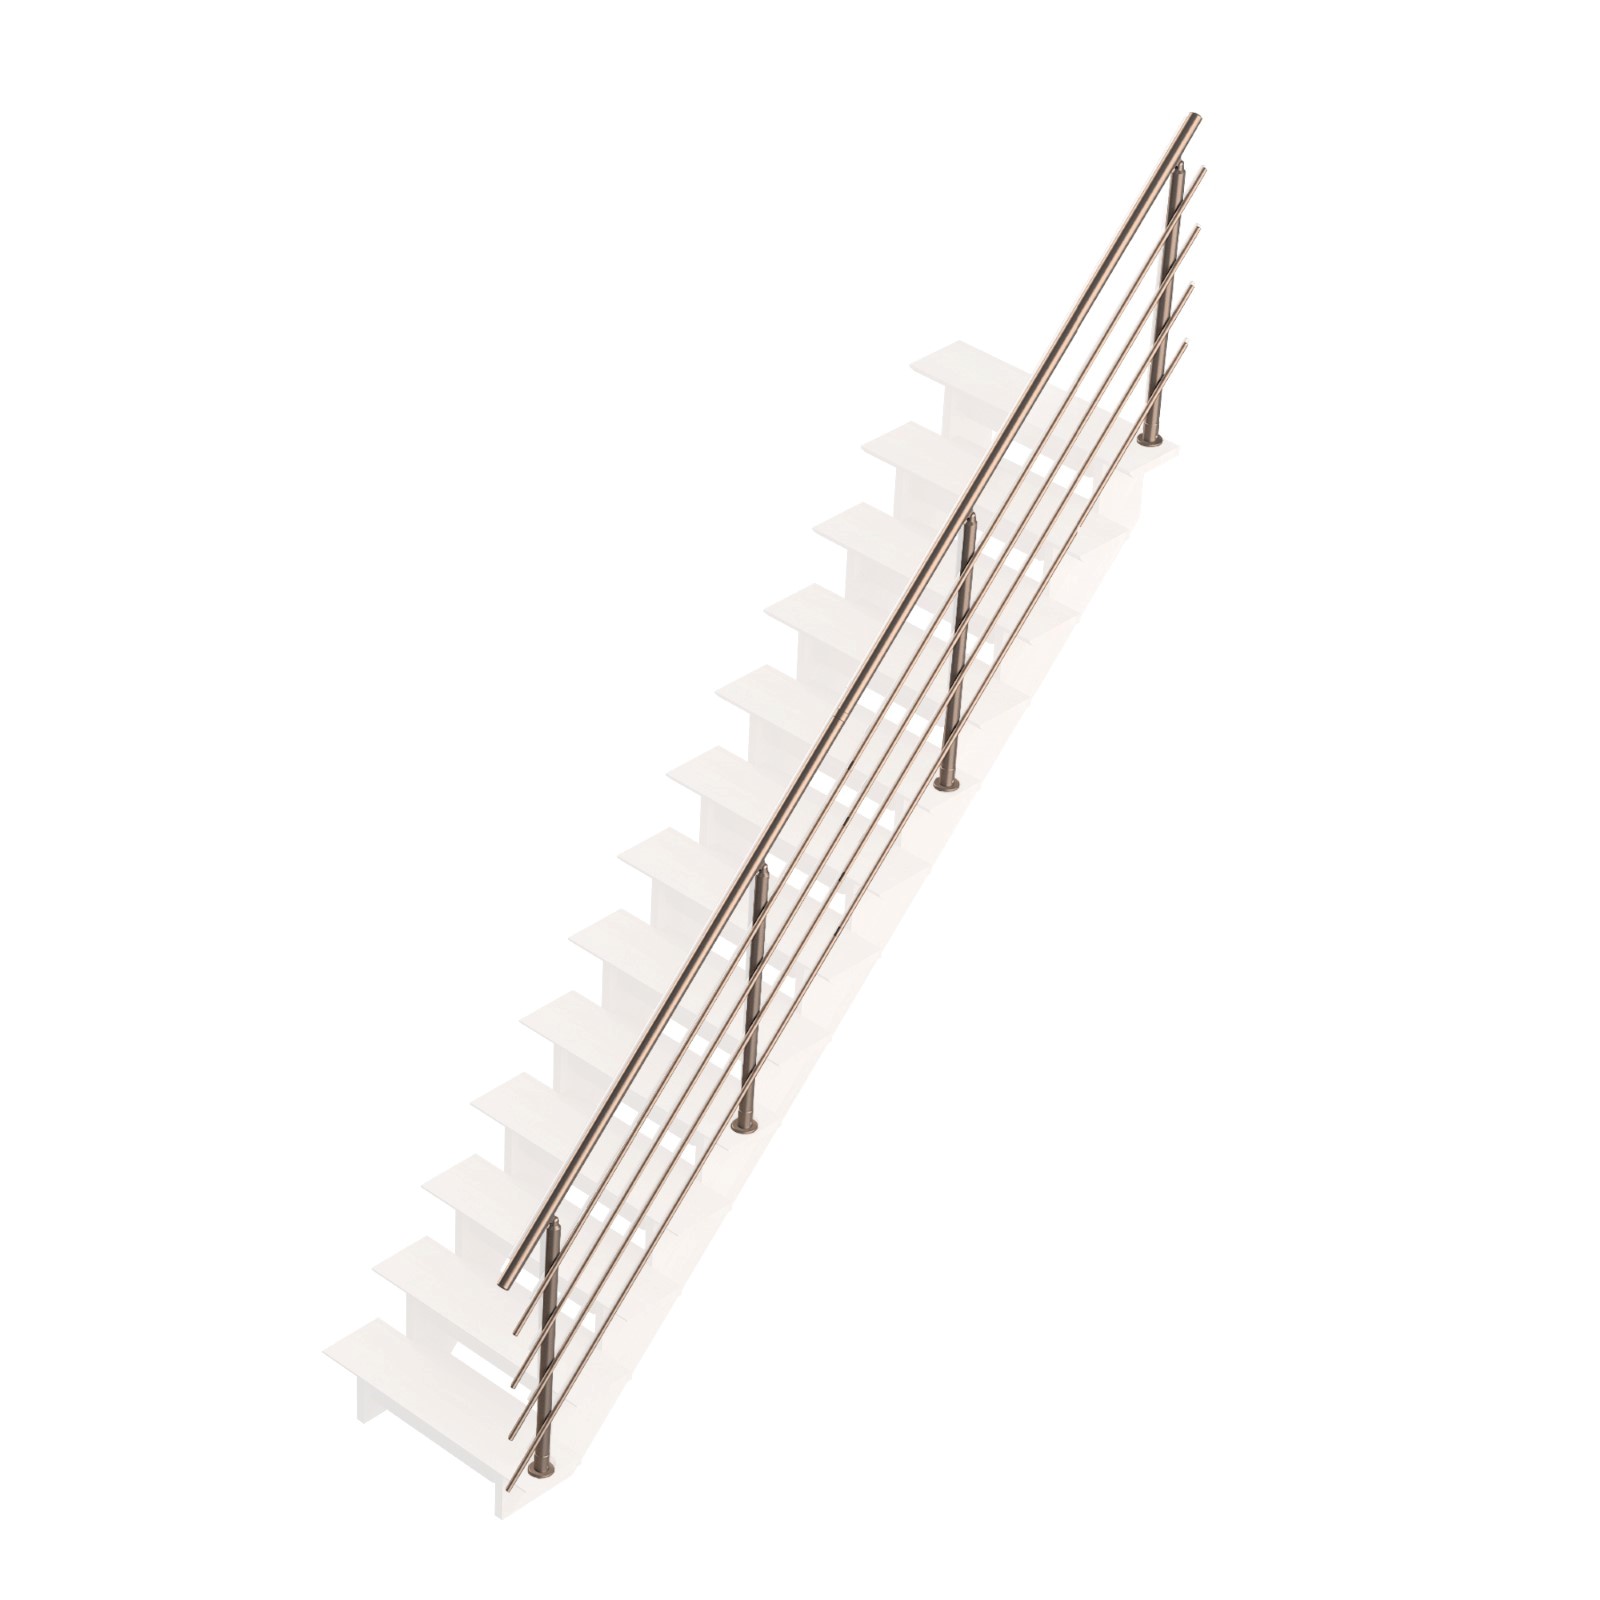 Rampe d'escalier en aluminium anodisé inox